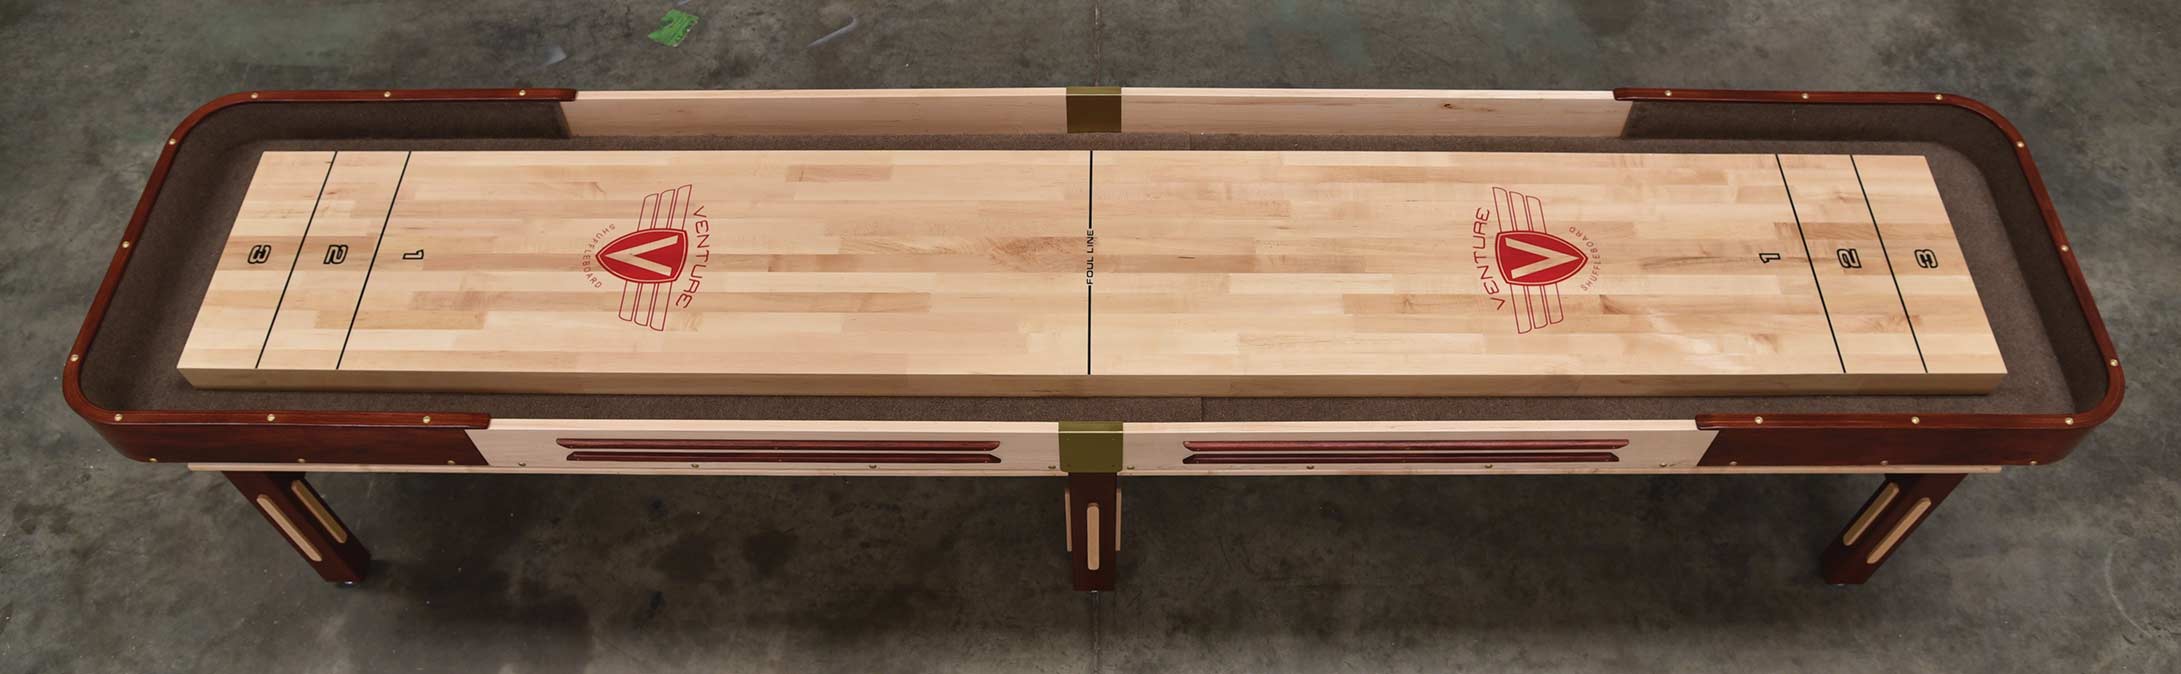 Venture Grand Deluxe 14' Shuffleboard Table